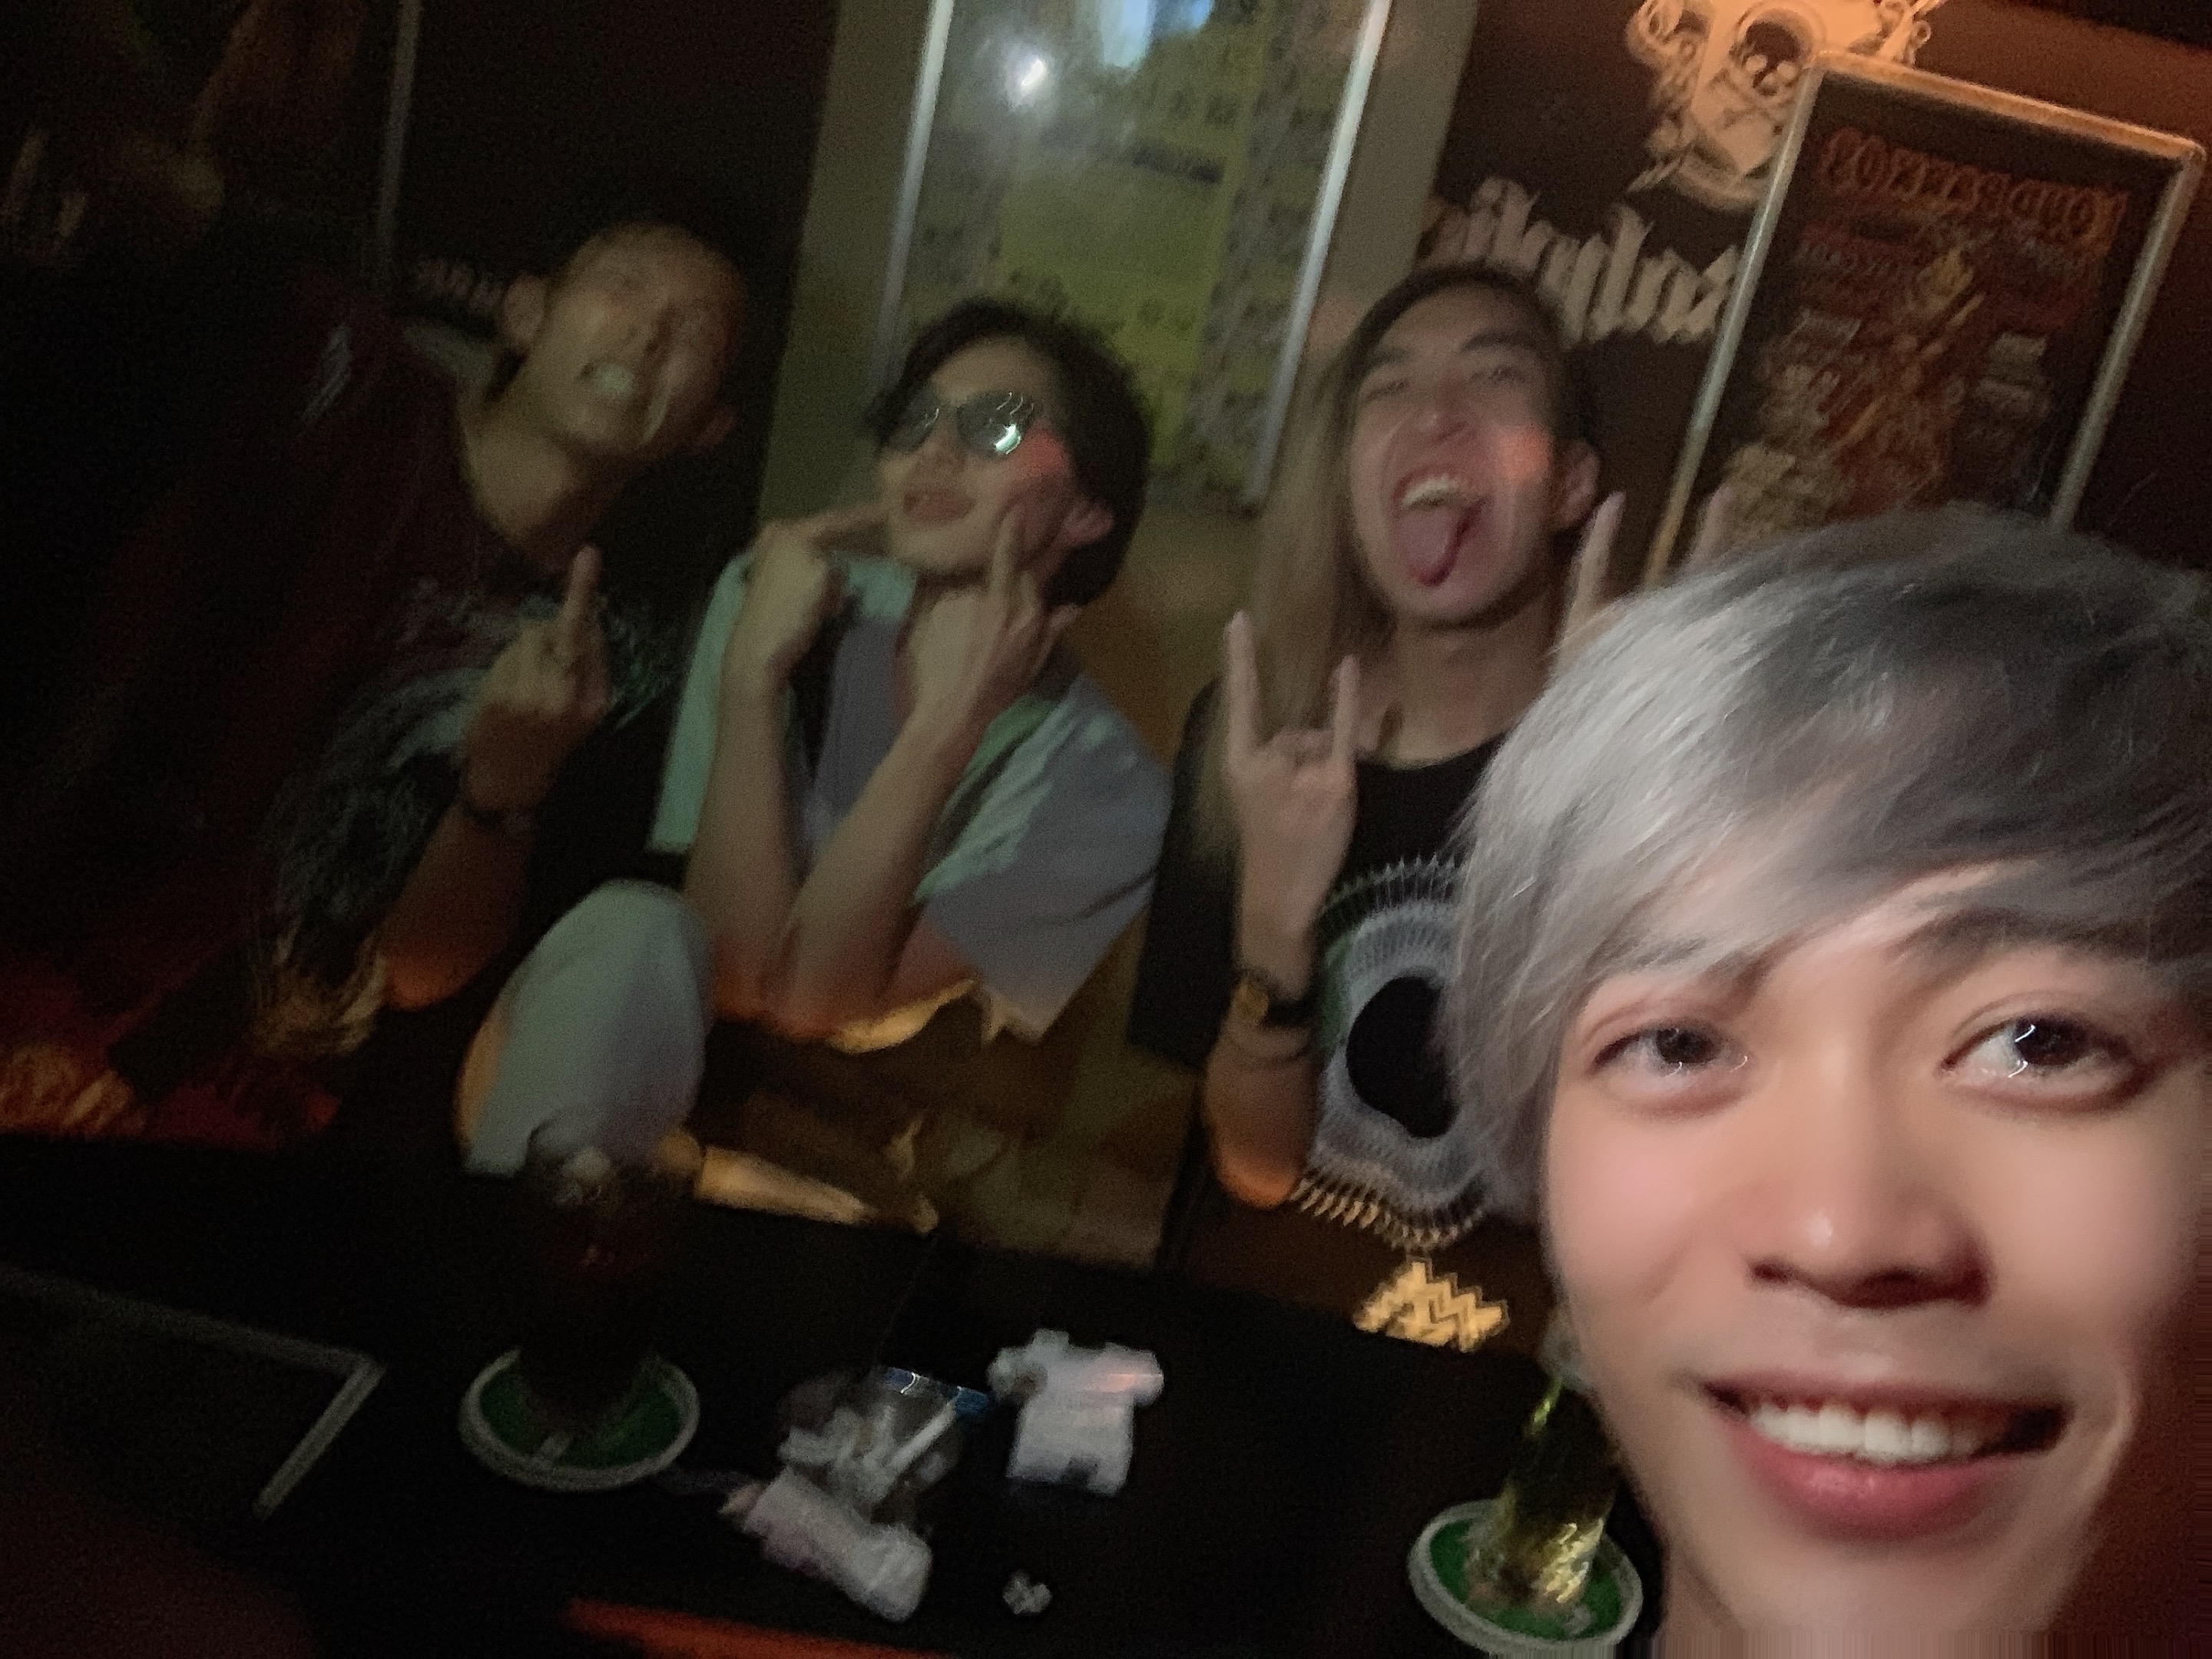 https://bar-rockaholic.jp/shibuya/blog/64837707-CED1-450B-AD6C-CB6EF53E6632.jpeg